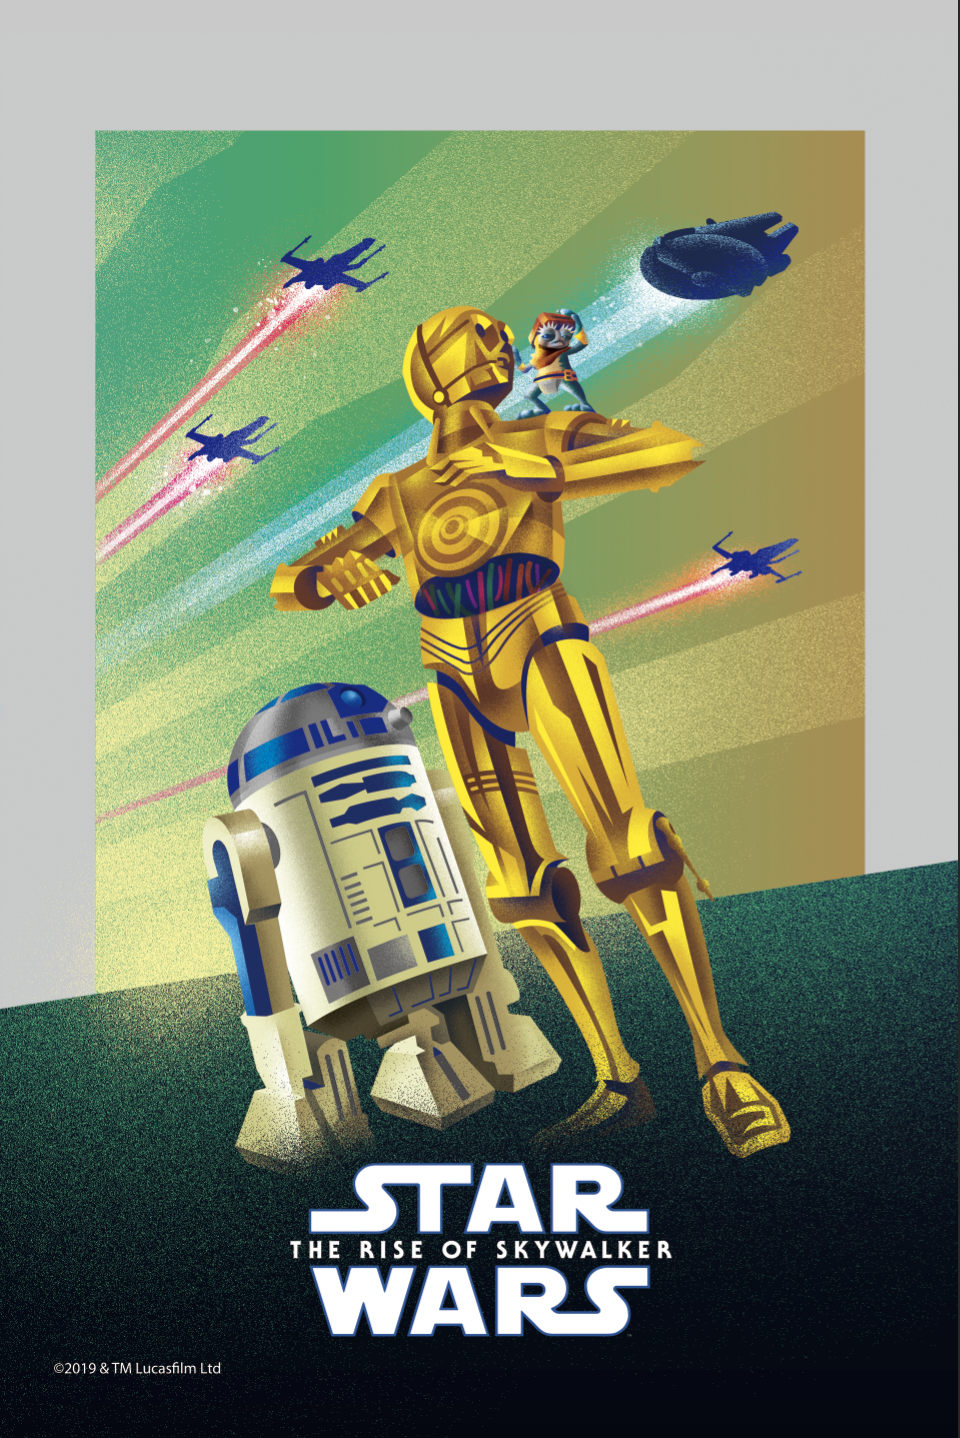 Artwork by Disney/Lucas – Star Wars: The Rise of Skywalker